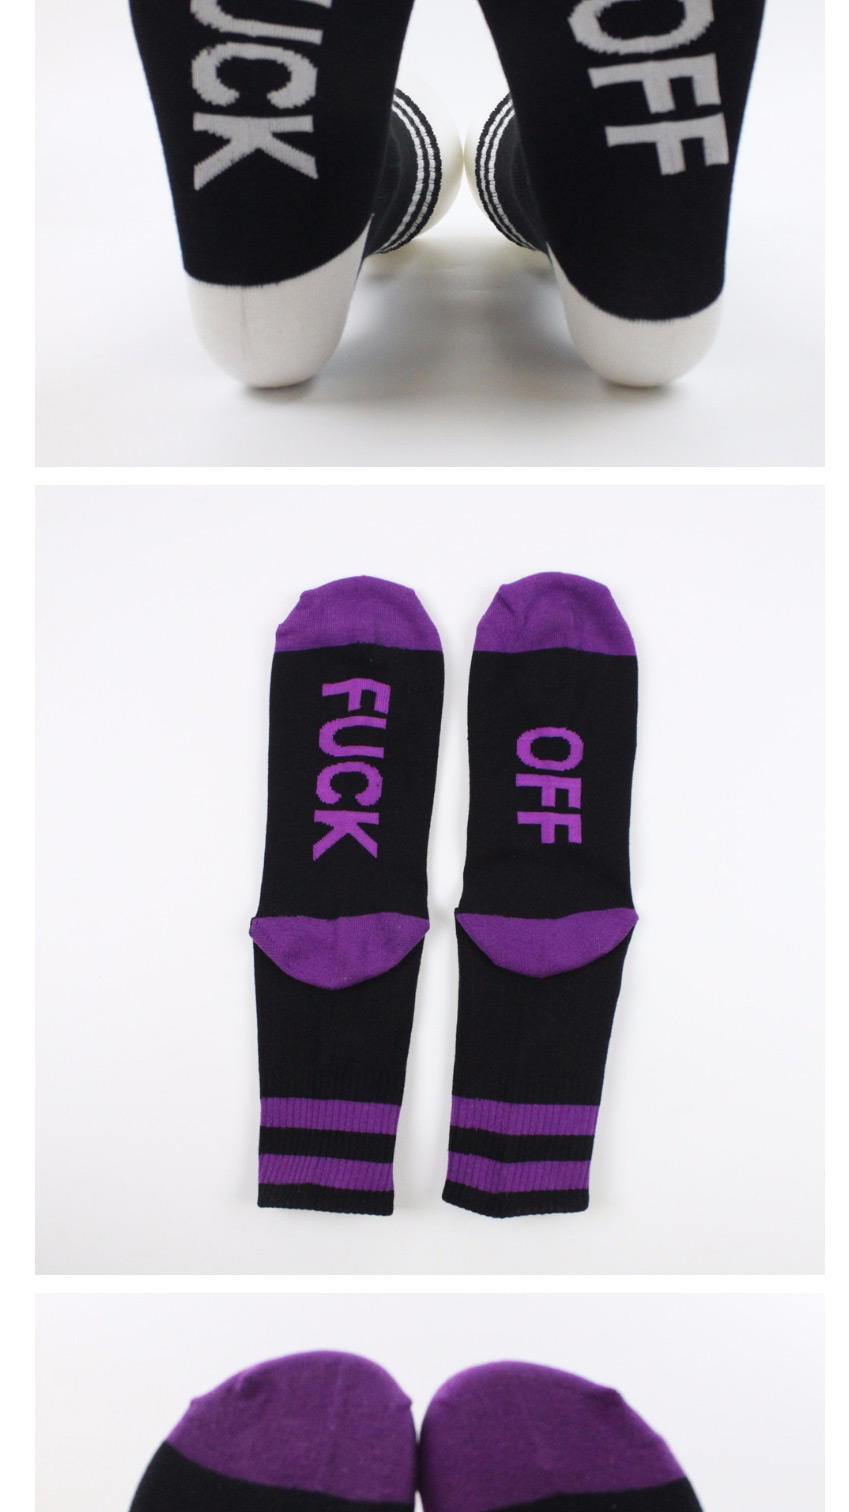 Fashion Blue Mens Cotton Socks With Contrasting Letters,Fashion Socks